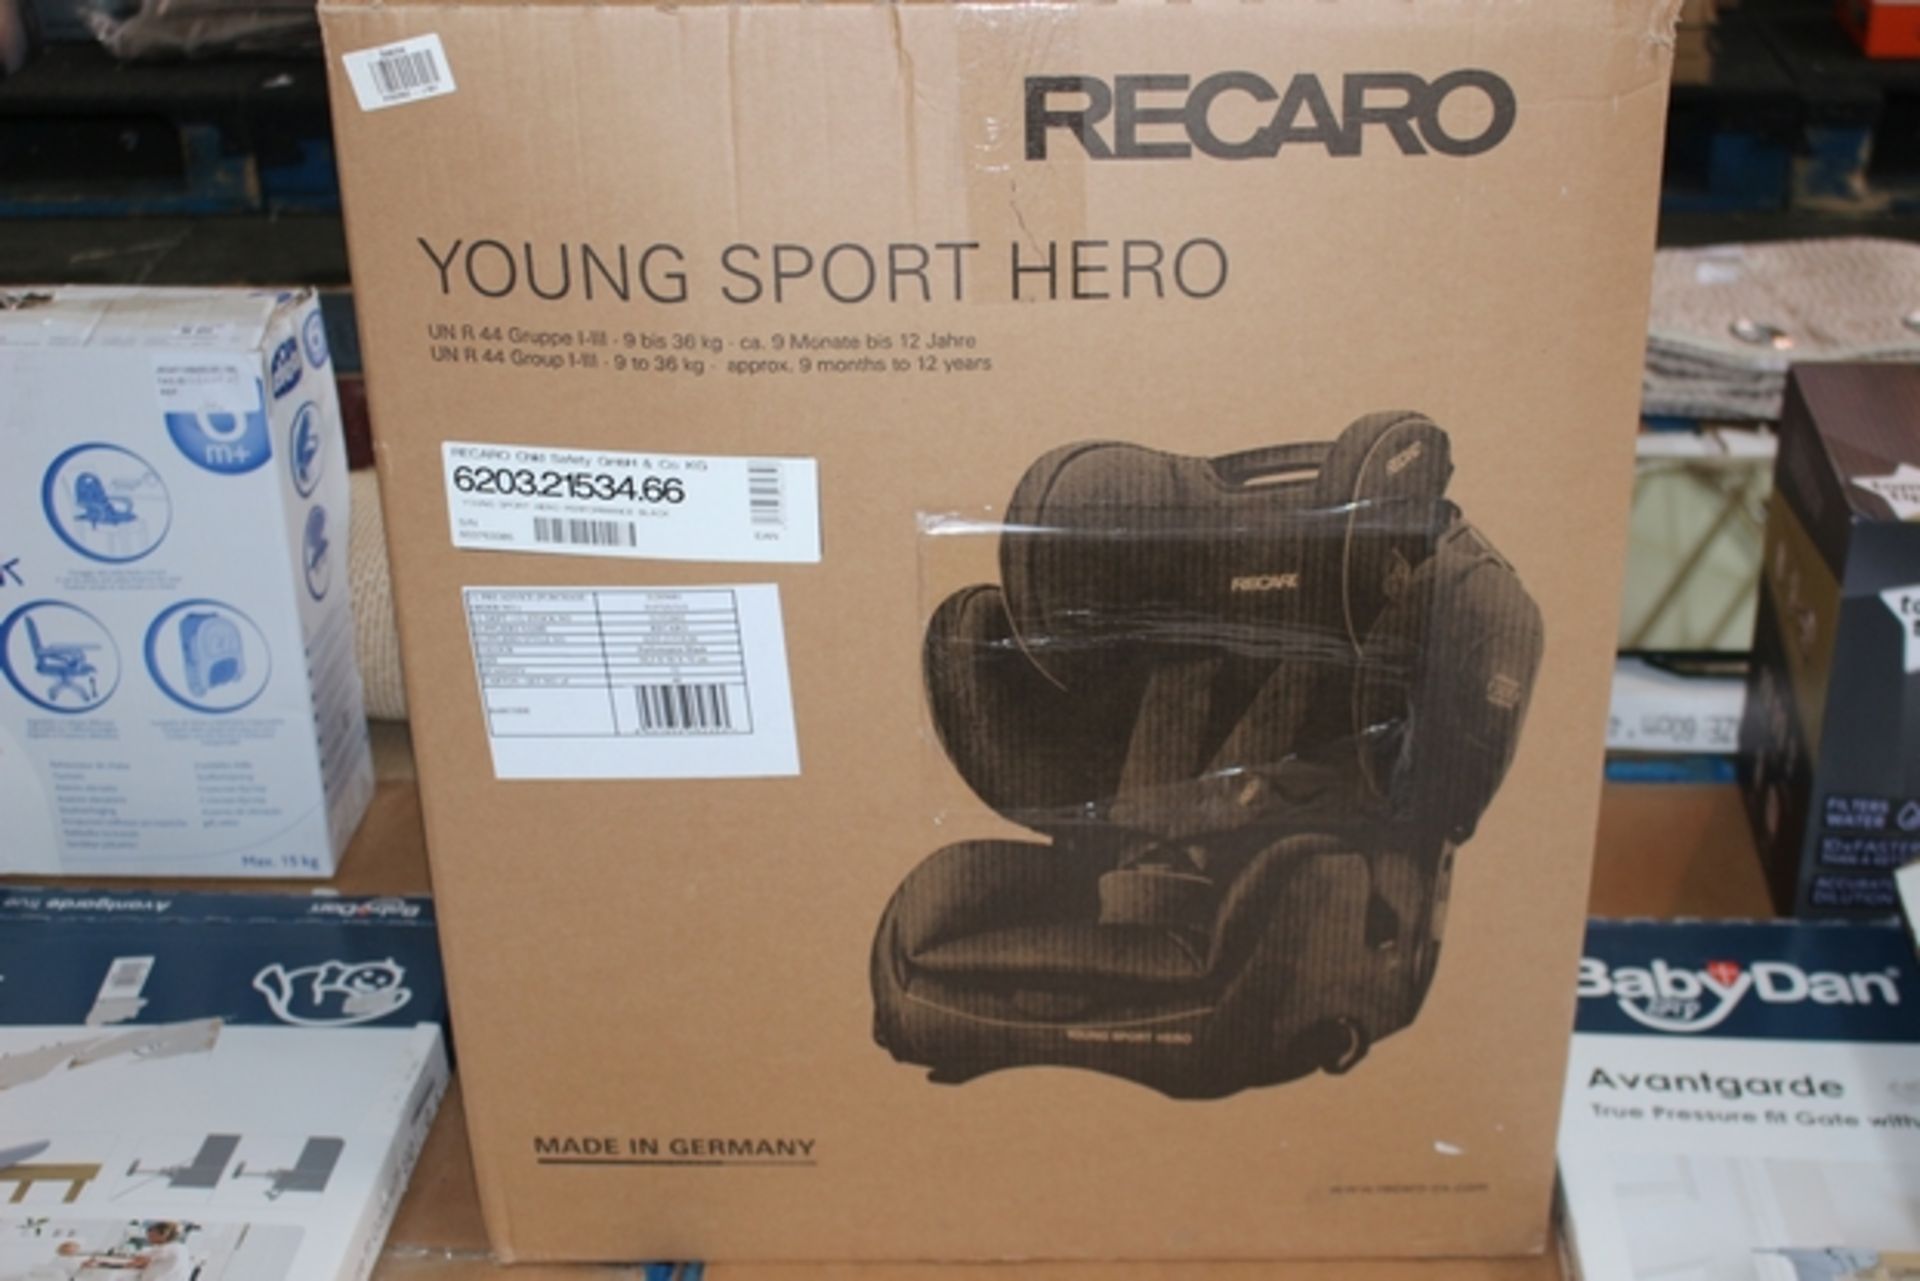 1X RICARO YOUNG SPORT HERO CHILDREN'S CAR SEAT RRP £140 (JL-9341149) (03/01/18) (4580256)